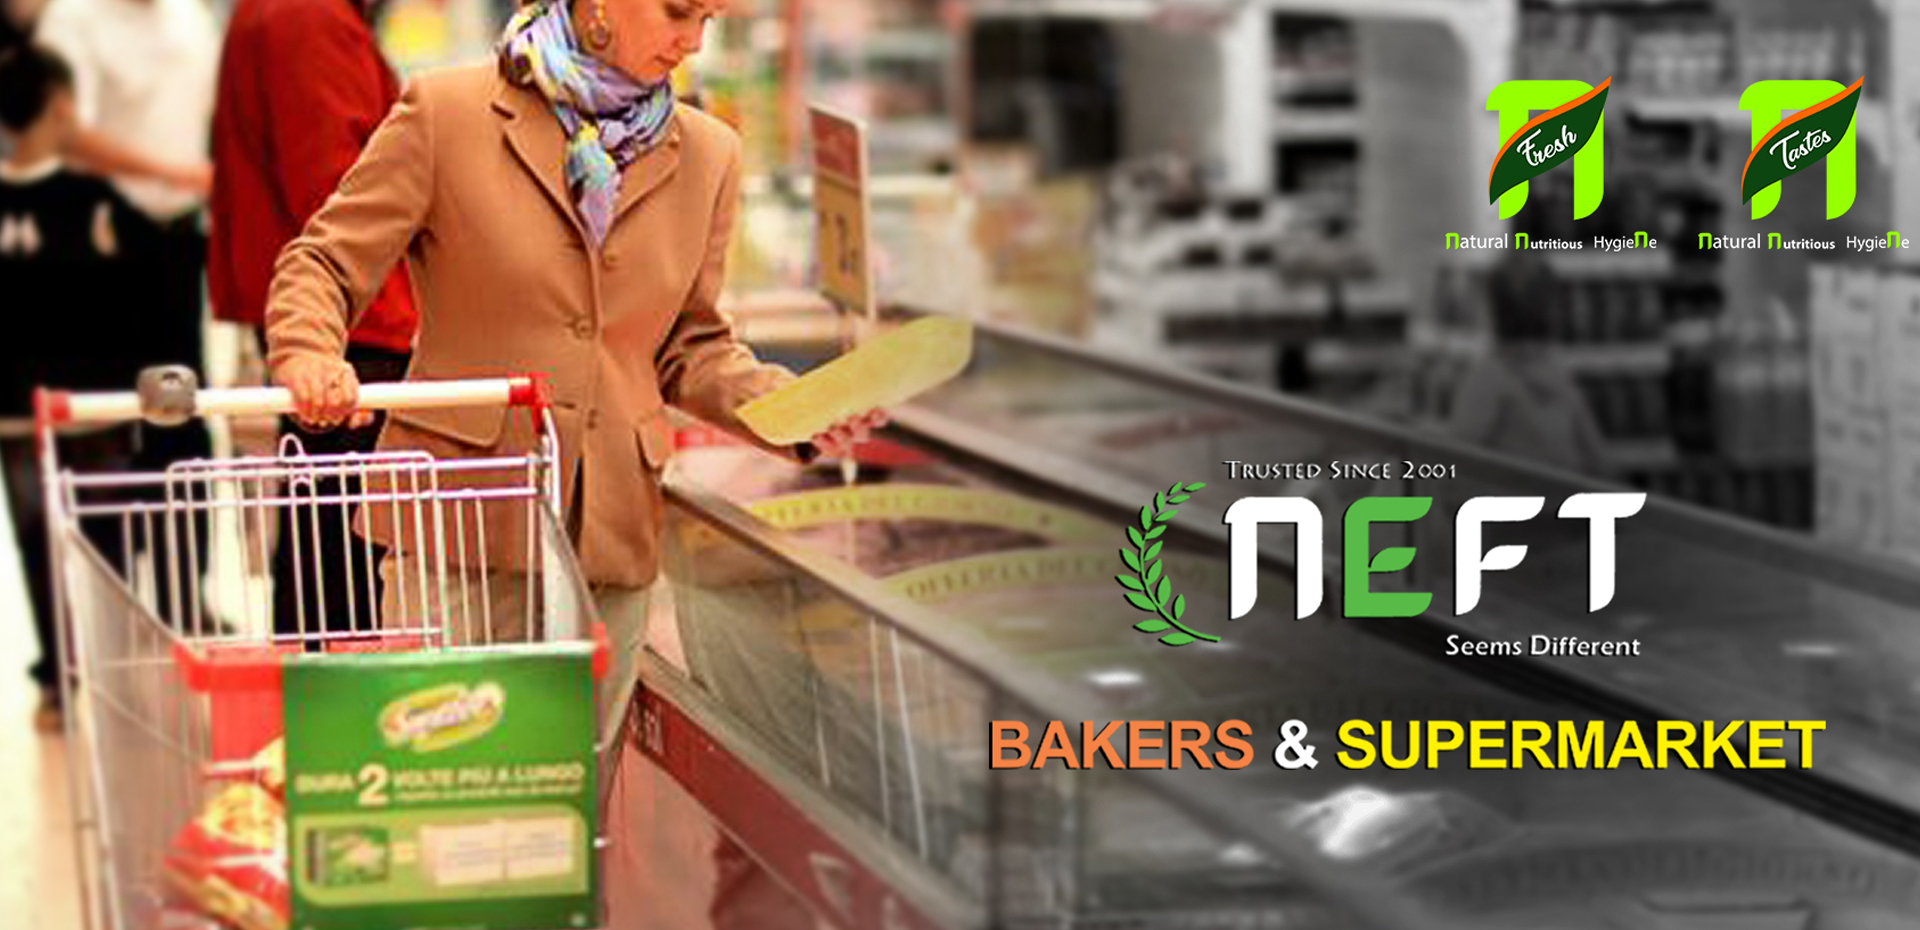 Neft Bakers and Supermarket kochi